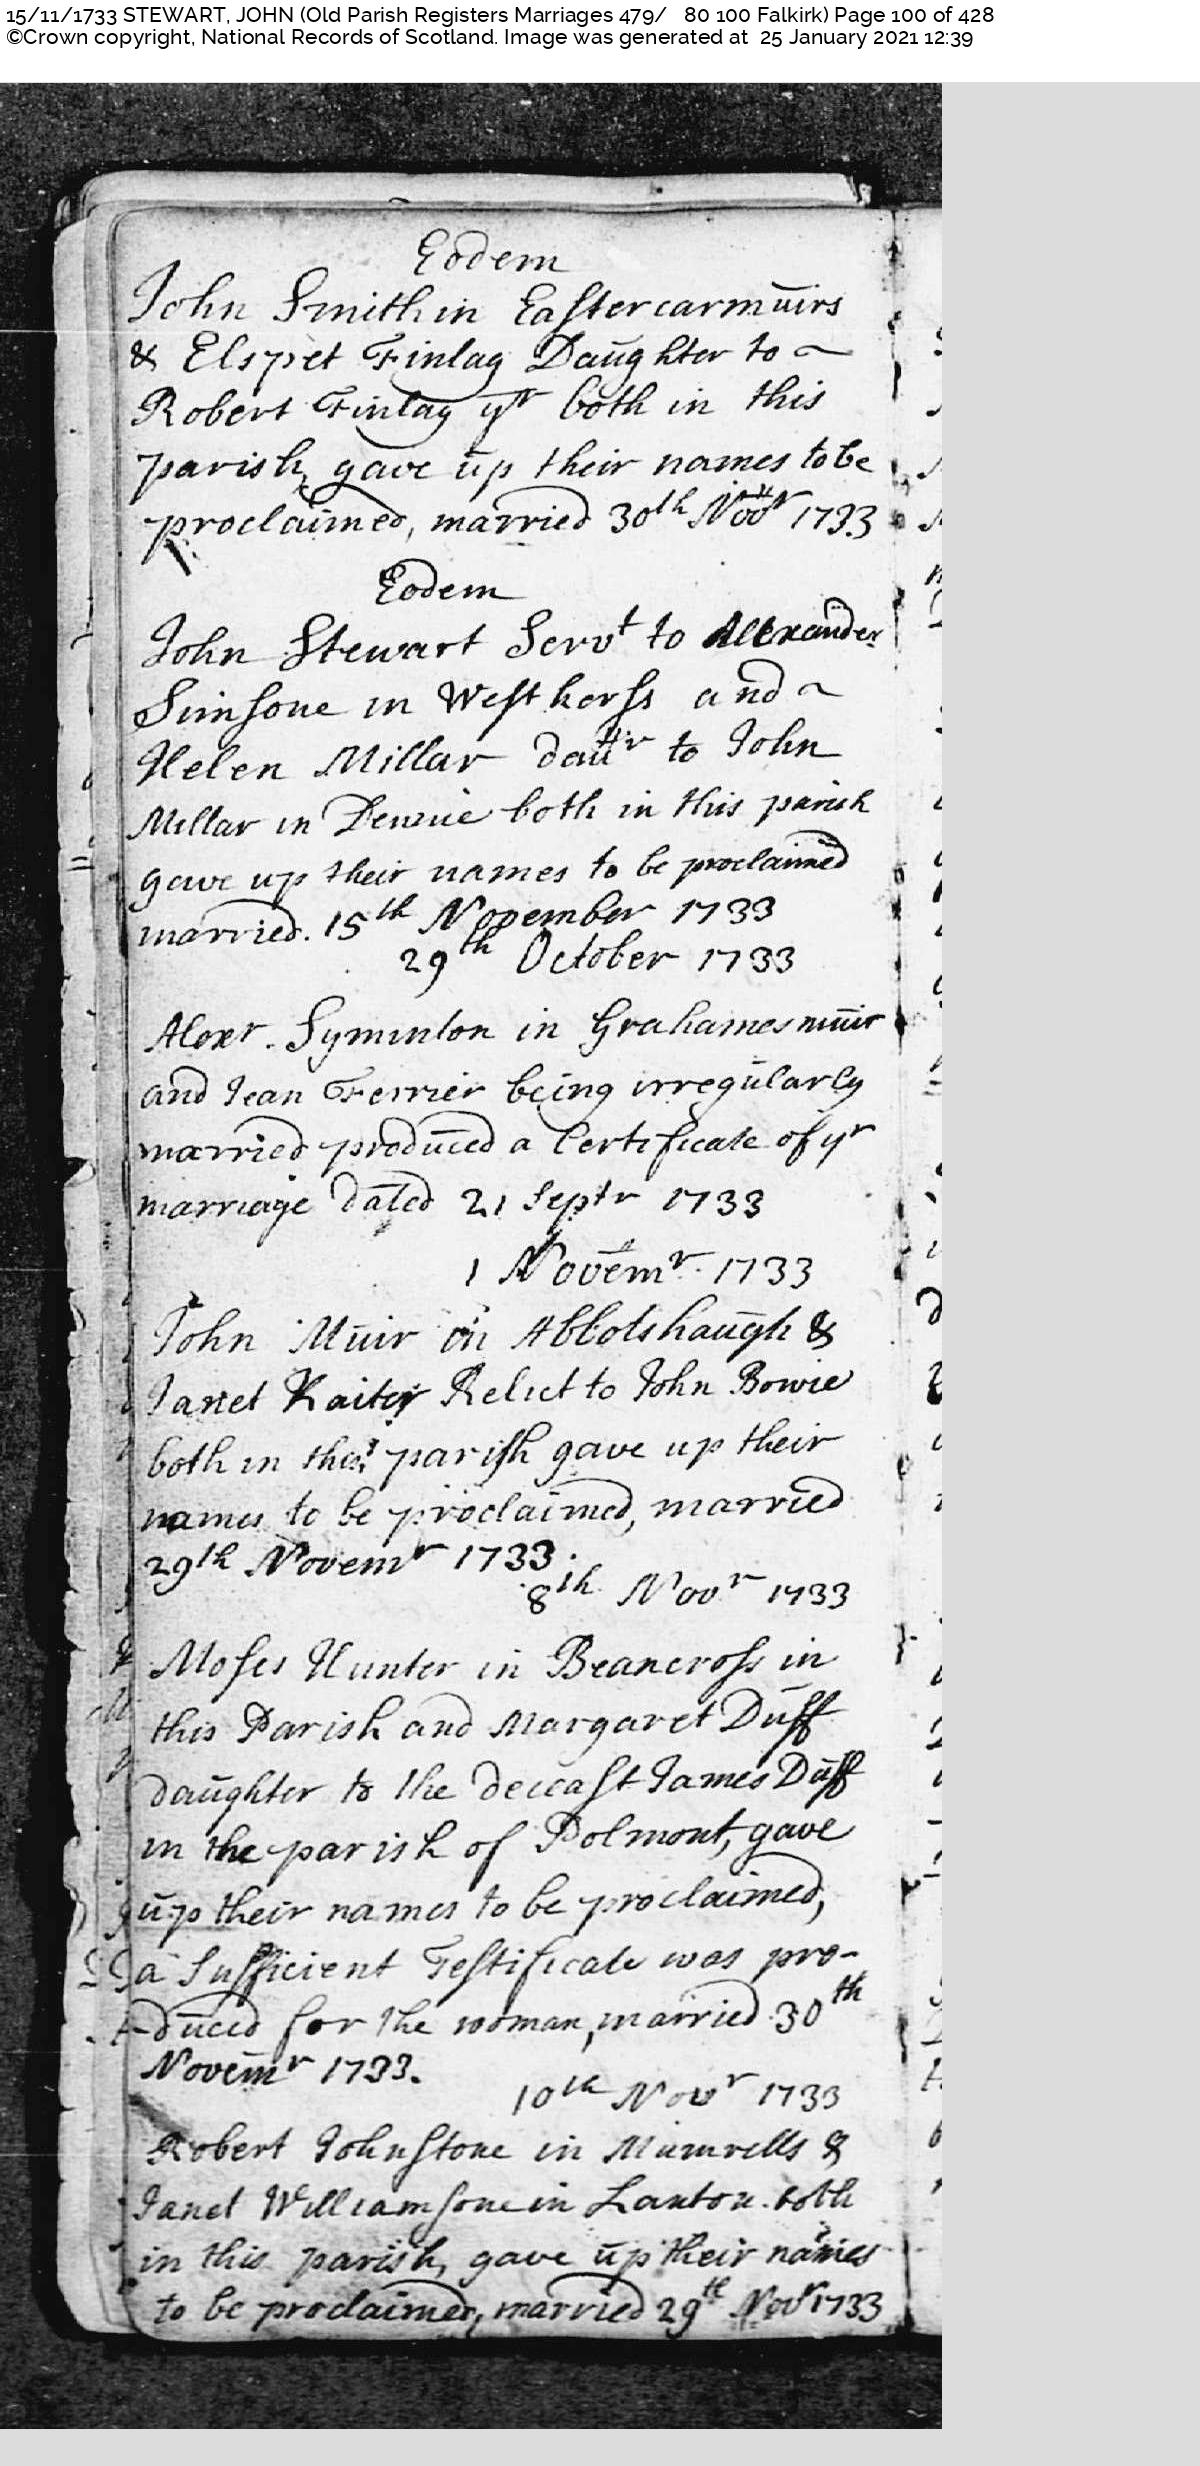 JohnStewart_HelenMillar_M1733 Falkirk, November 15, 1733